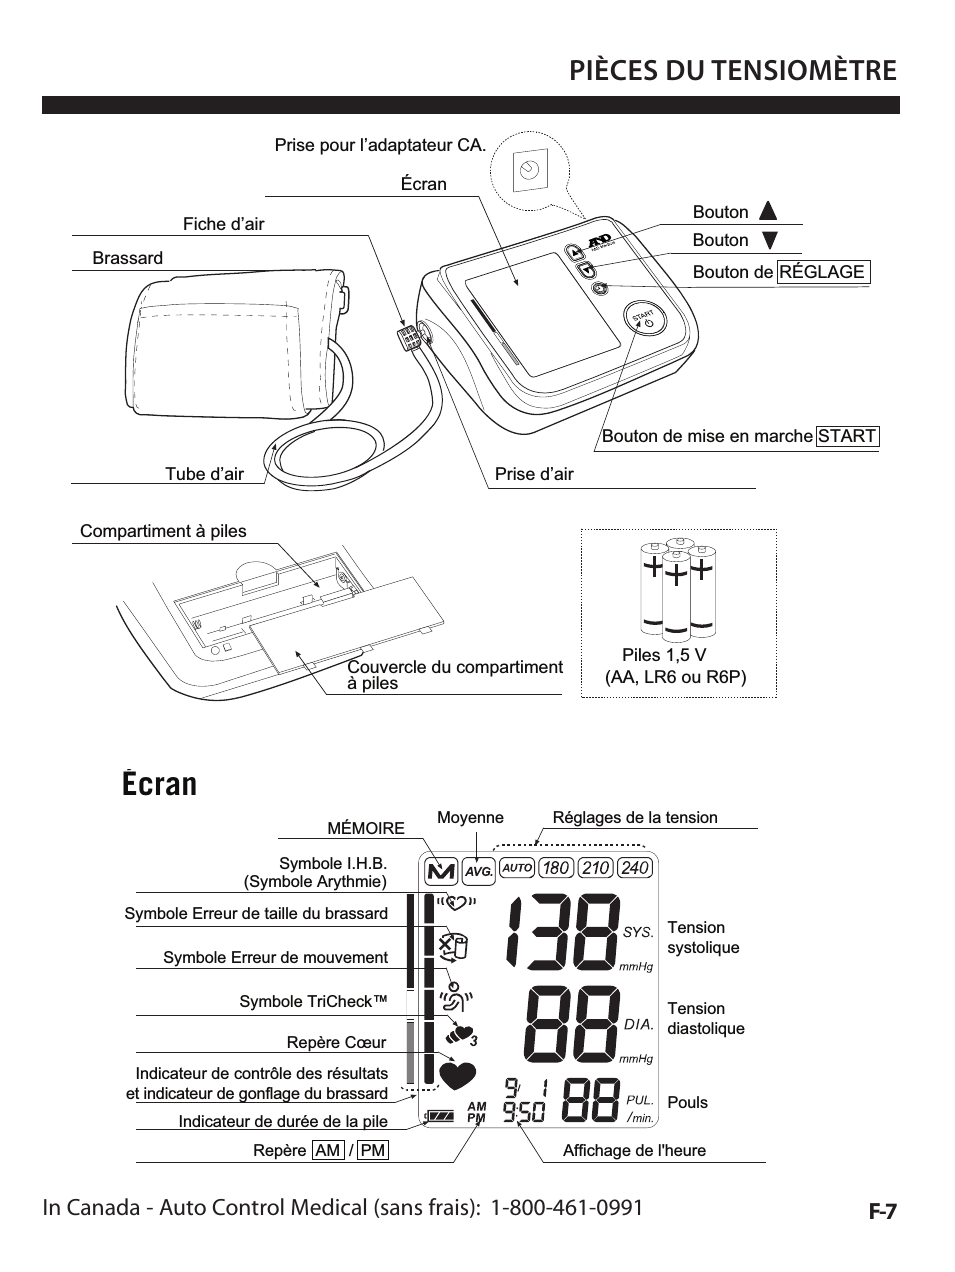 Premier/TriCheck Blood Pressure MOnitor UA-1020 (Page 41)